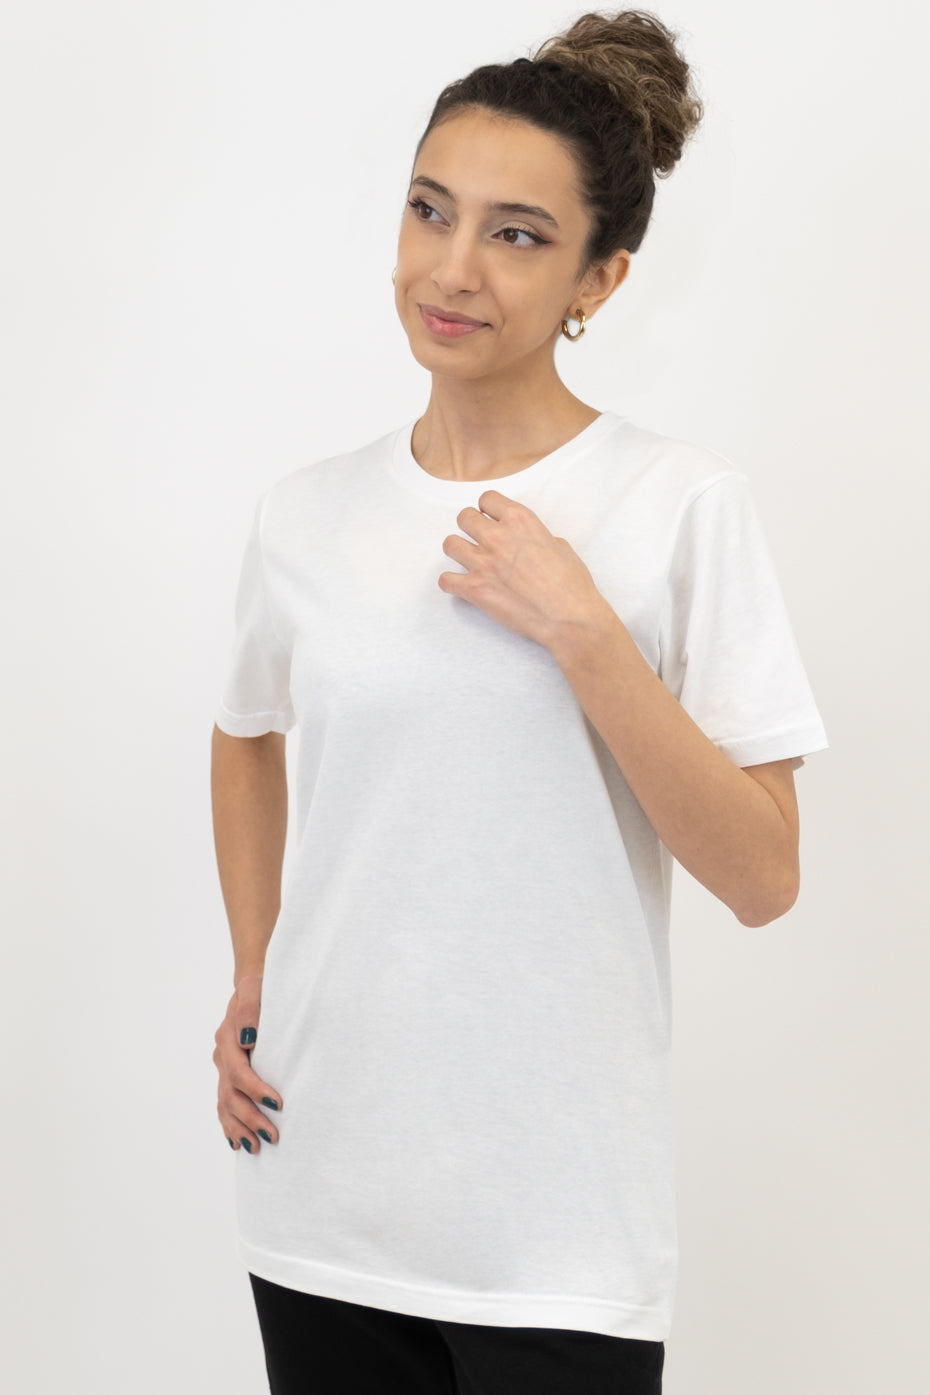 Laviva Sports 100% Polyester Sublimation T-Shirt Premium Quality Case White / X-Large / 1 Box